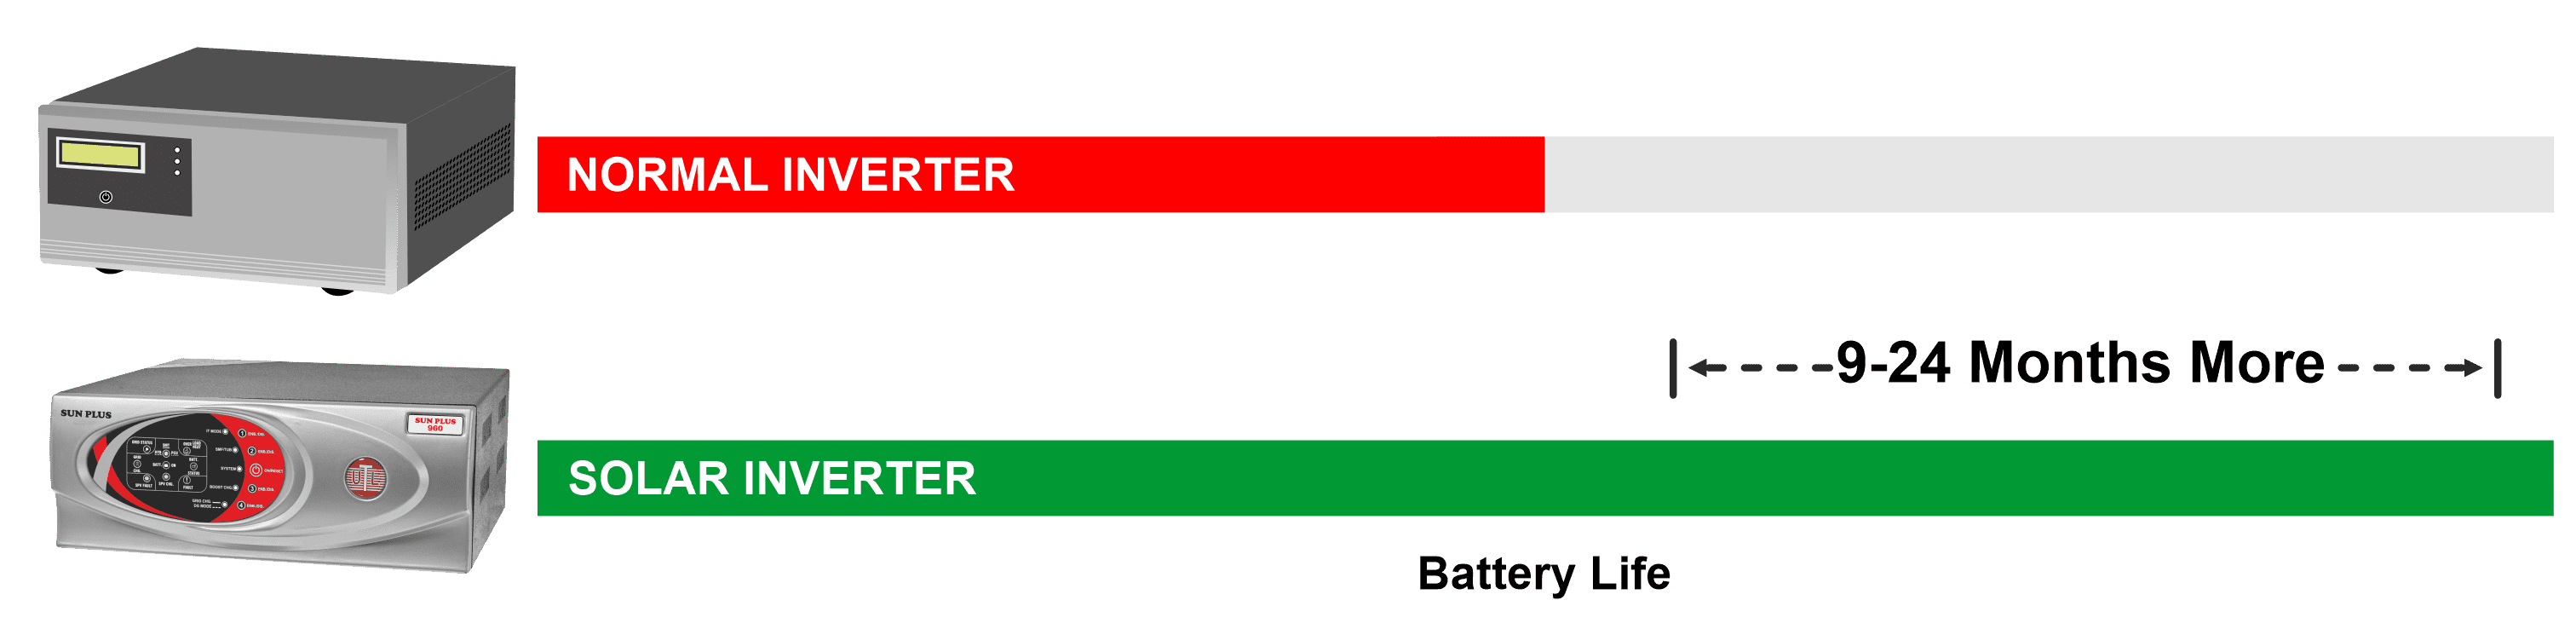 Battery life comparison between Normal Inverter and Solar Inverter